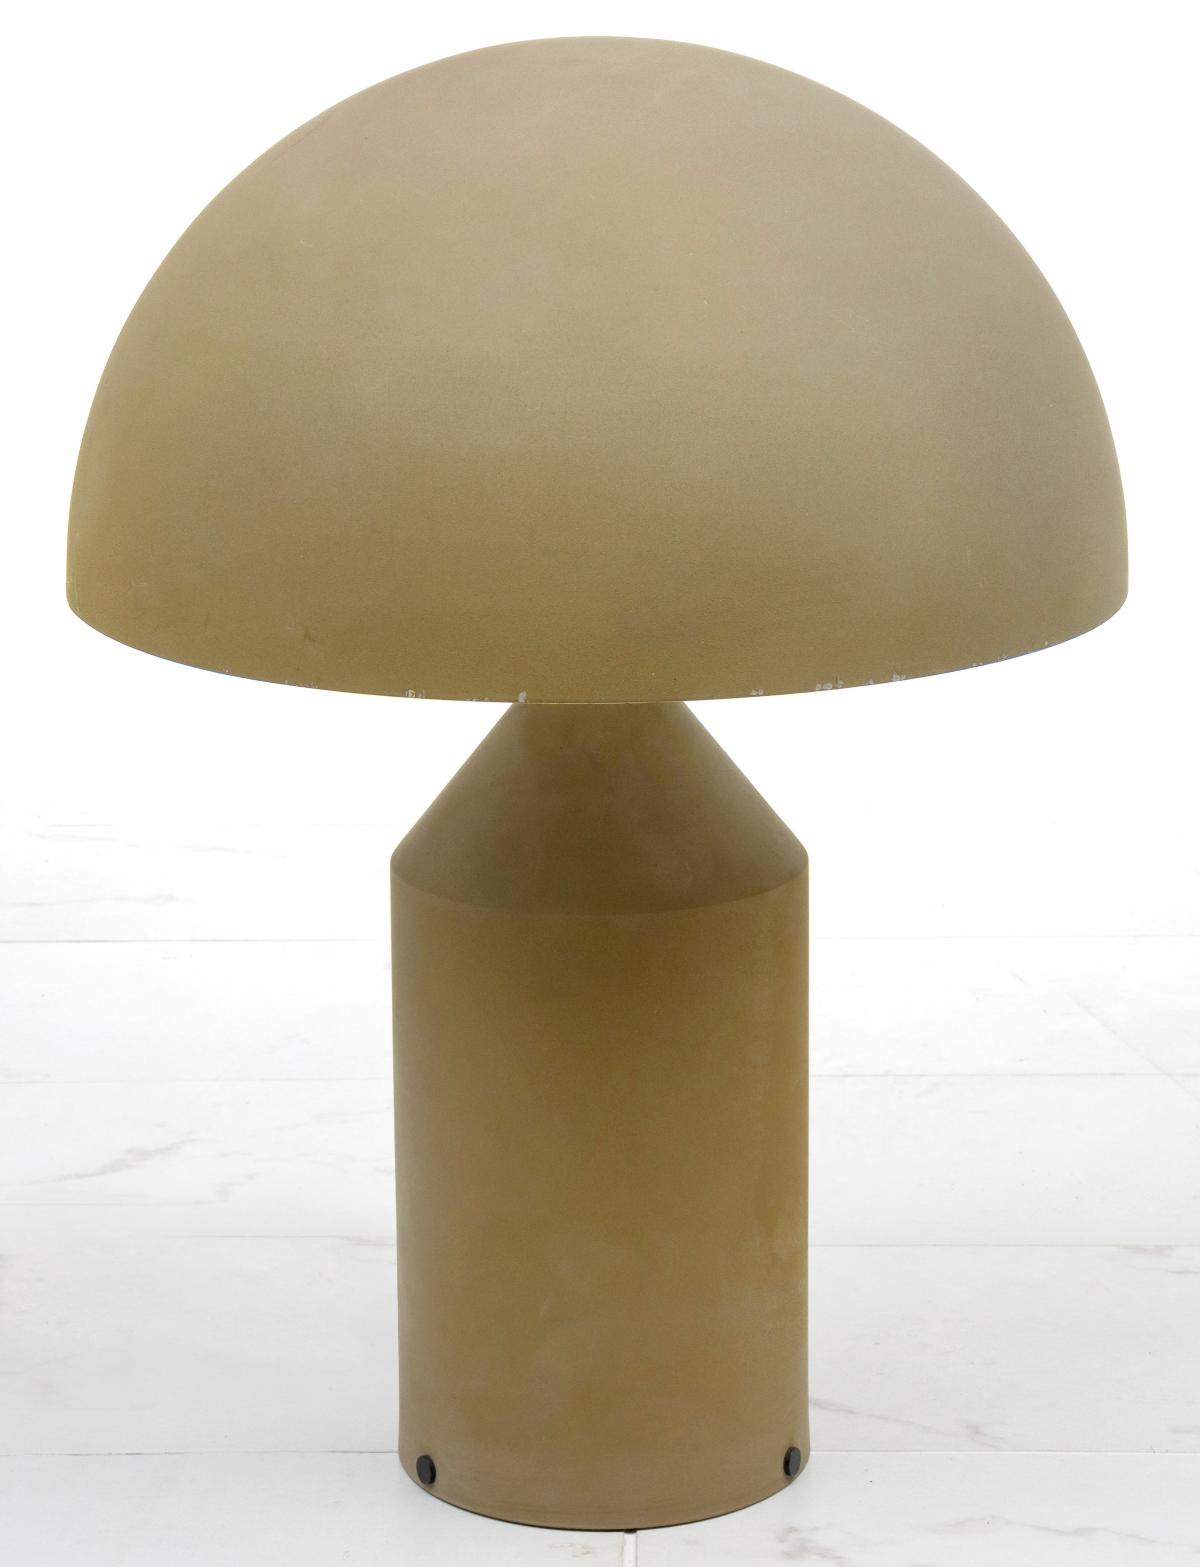 VICO MAGISTRETTI TABLE LAMP FOR OLUCE, ITALY C. 1977